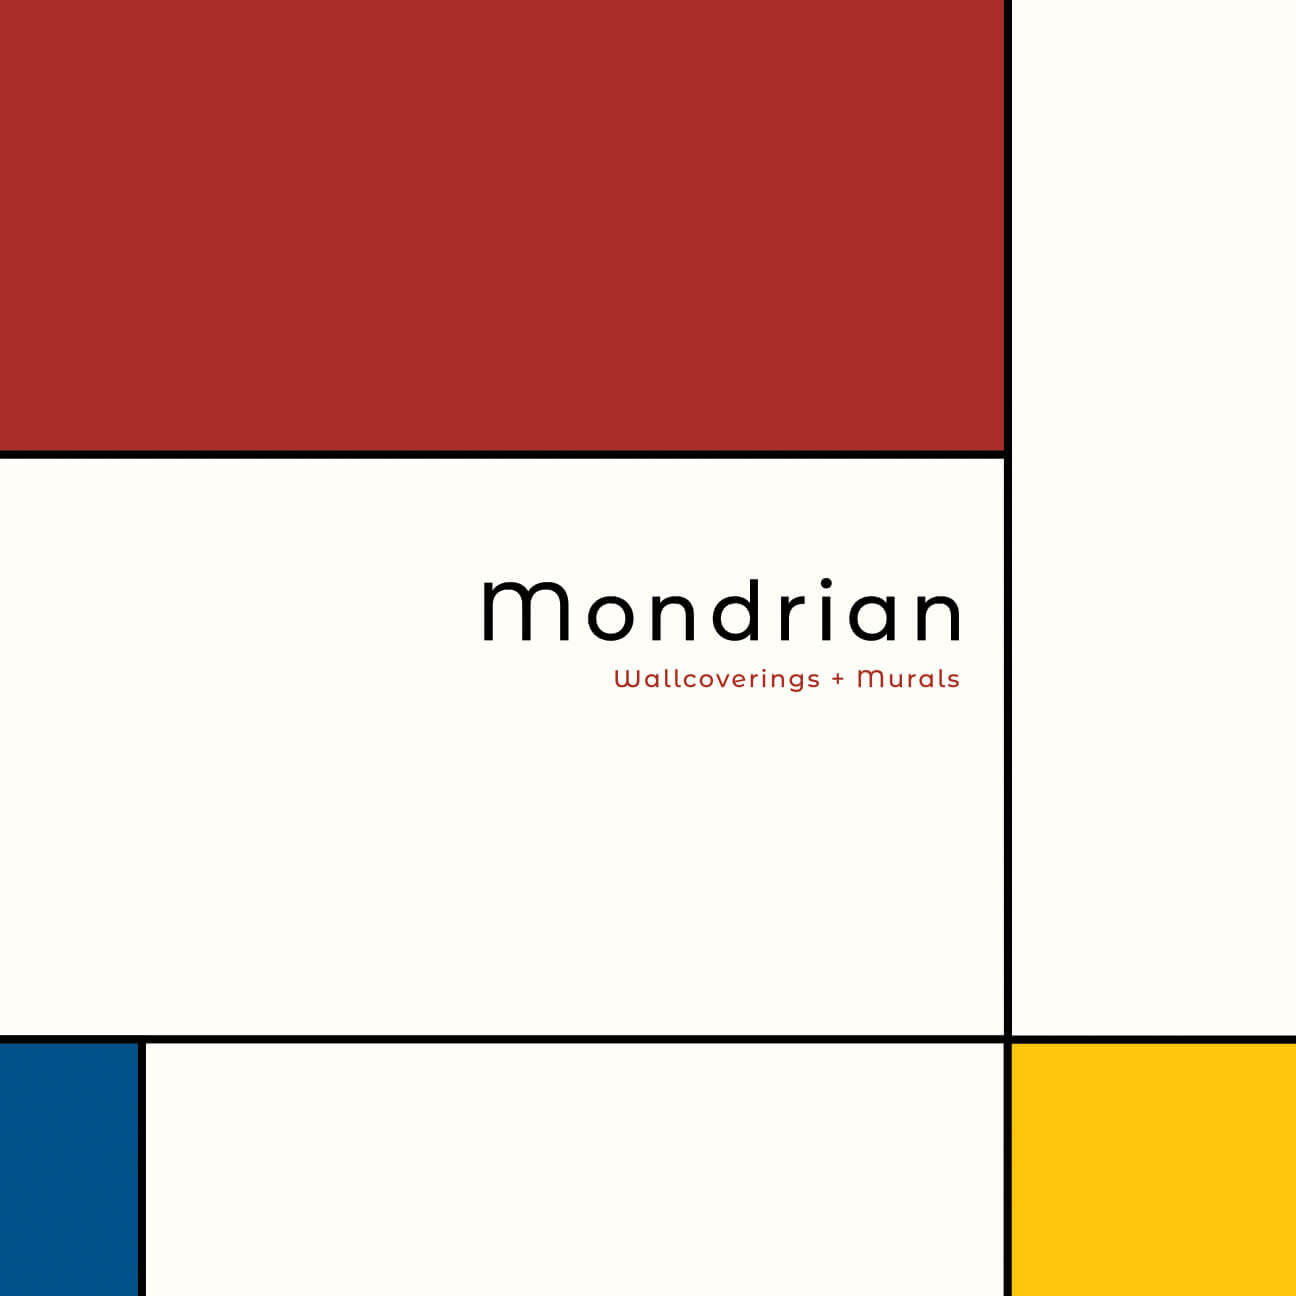 Seabrook Mondrian De Stijl Wallpaper - Steel & Silver